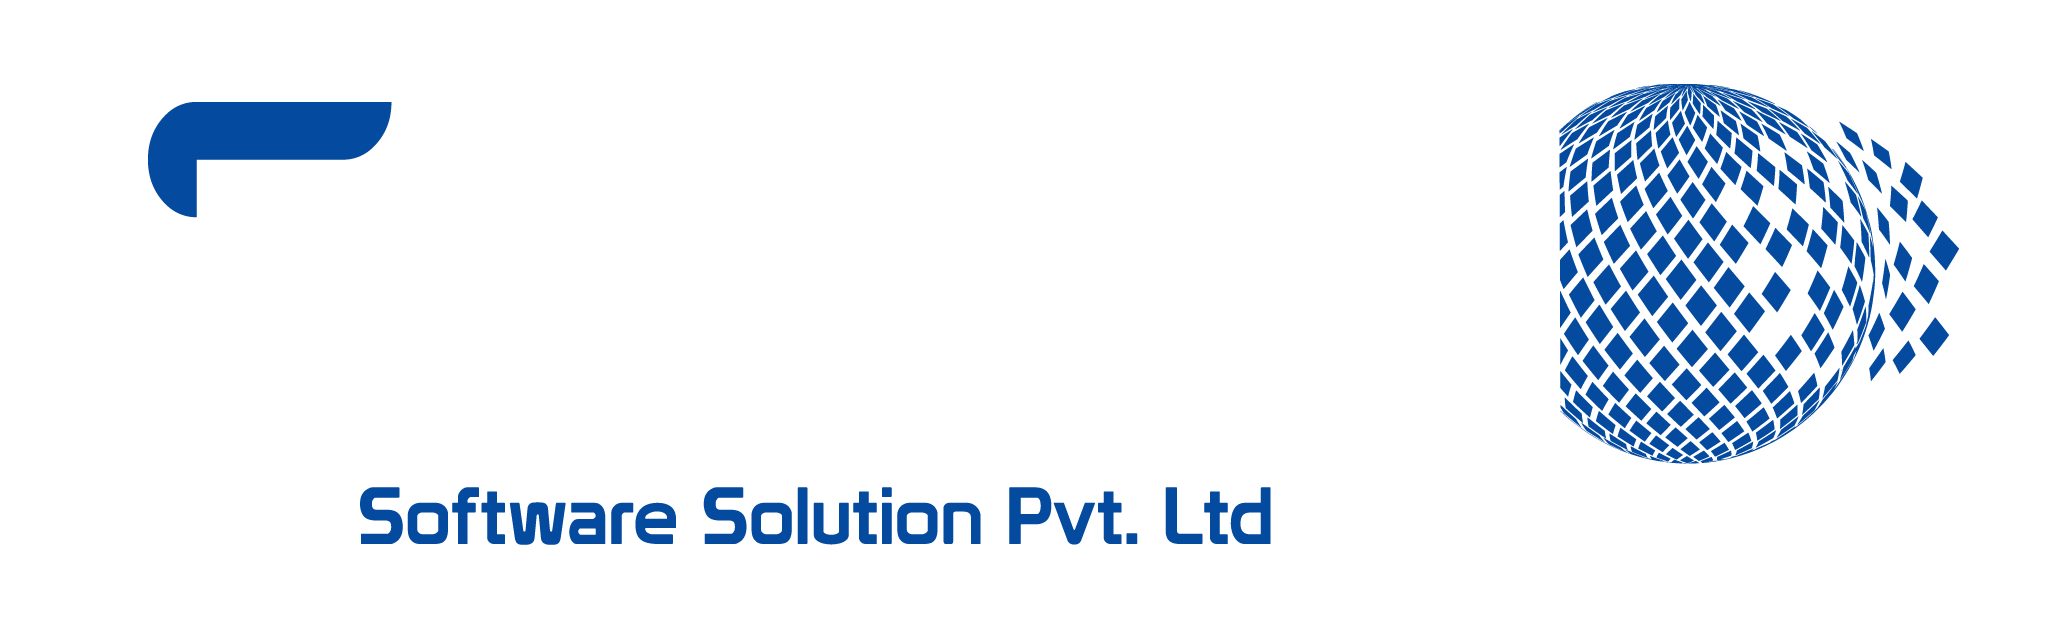 Satkar Software Solution Pvt. Ltd - Supports